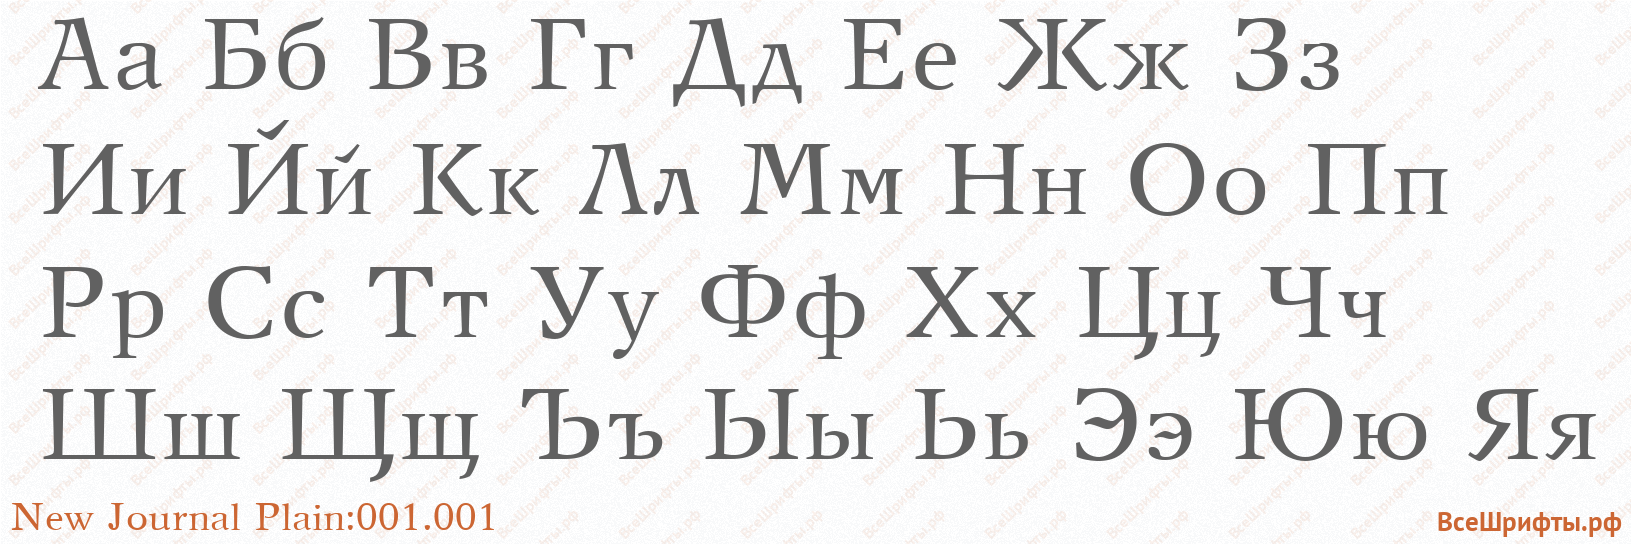 Шрифт New Journal Plain:001.001 с русскими буквами